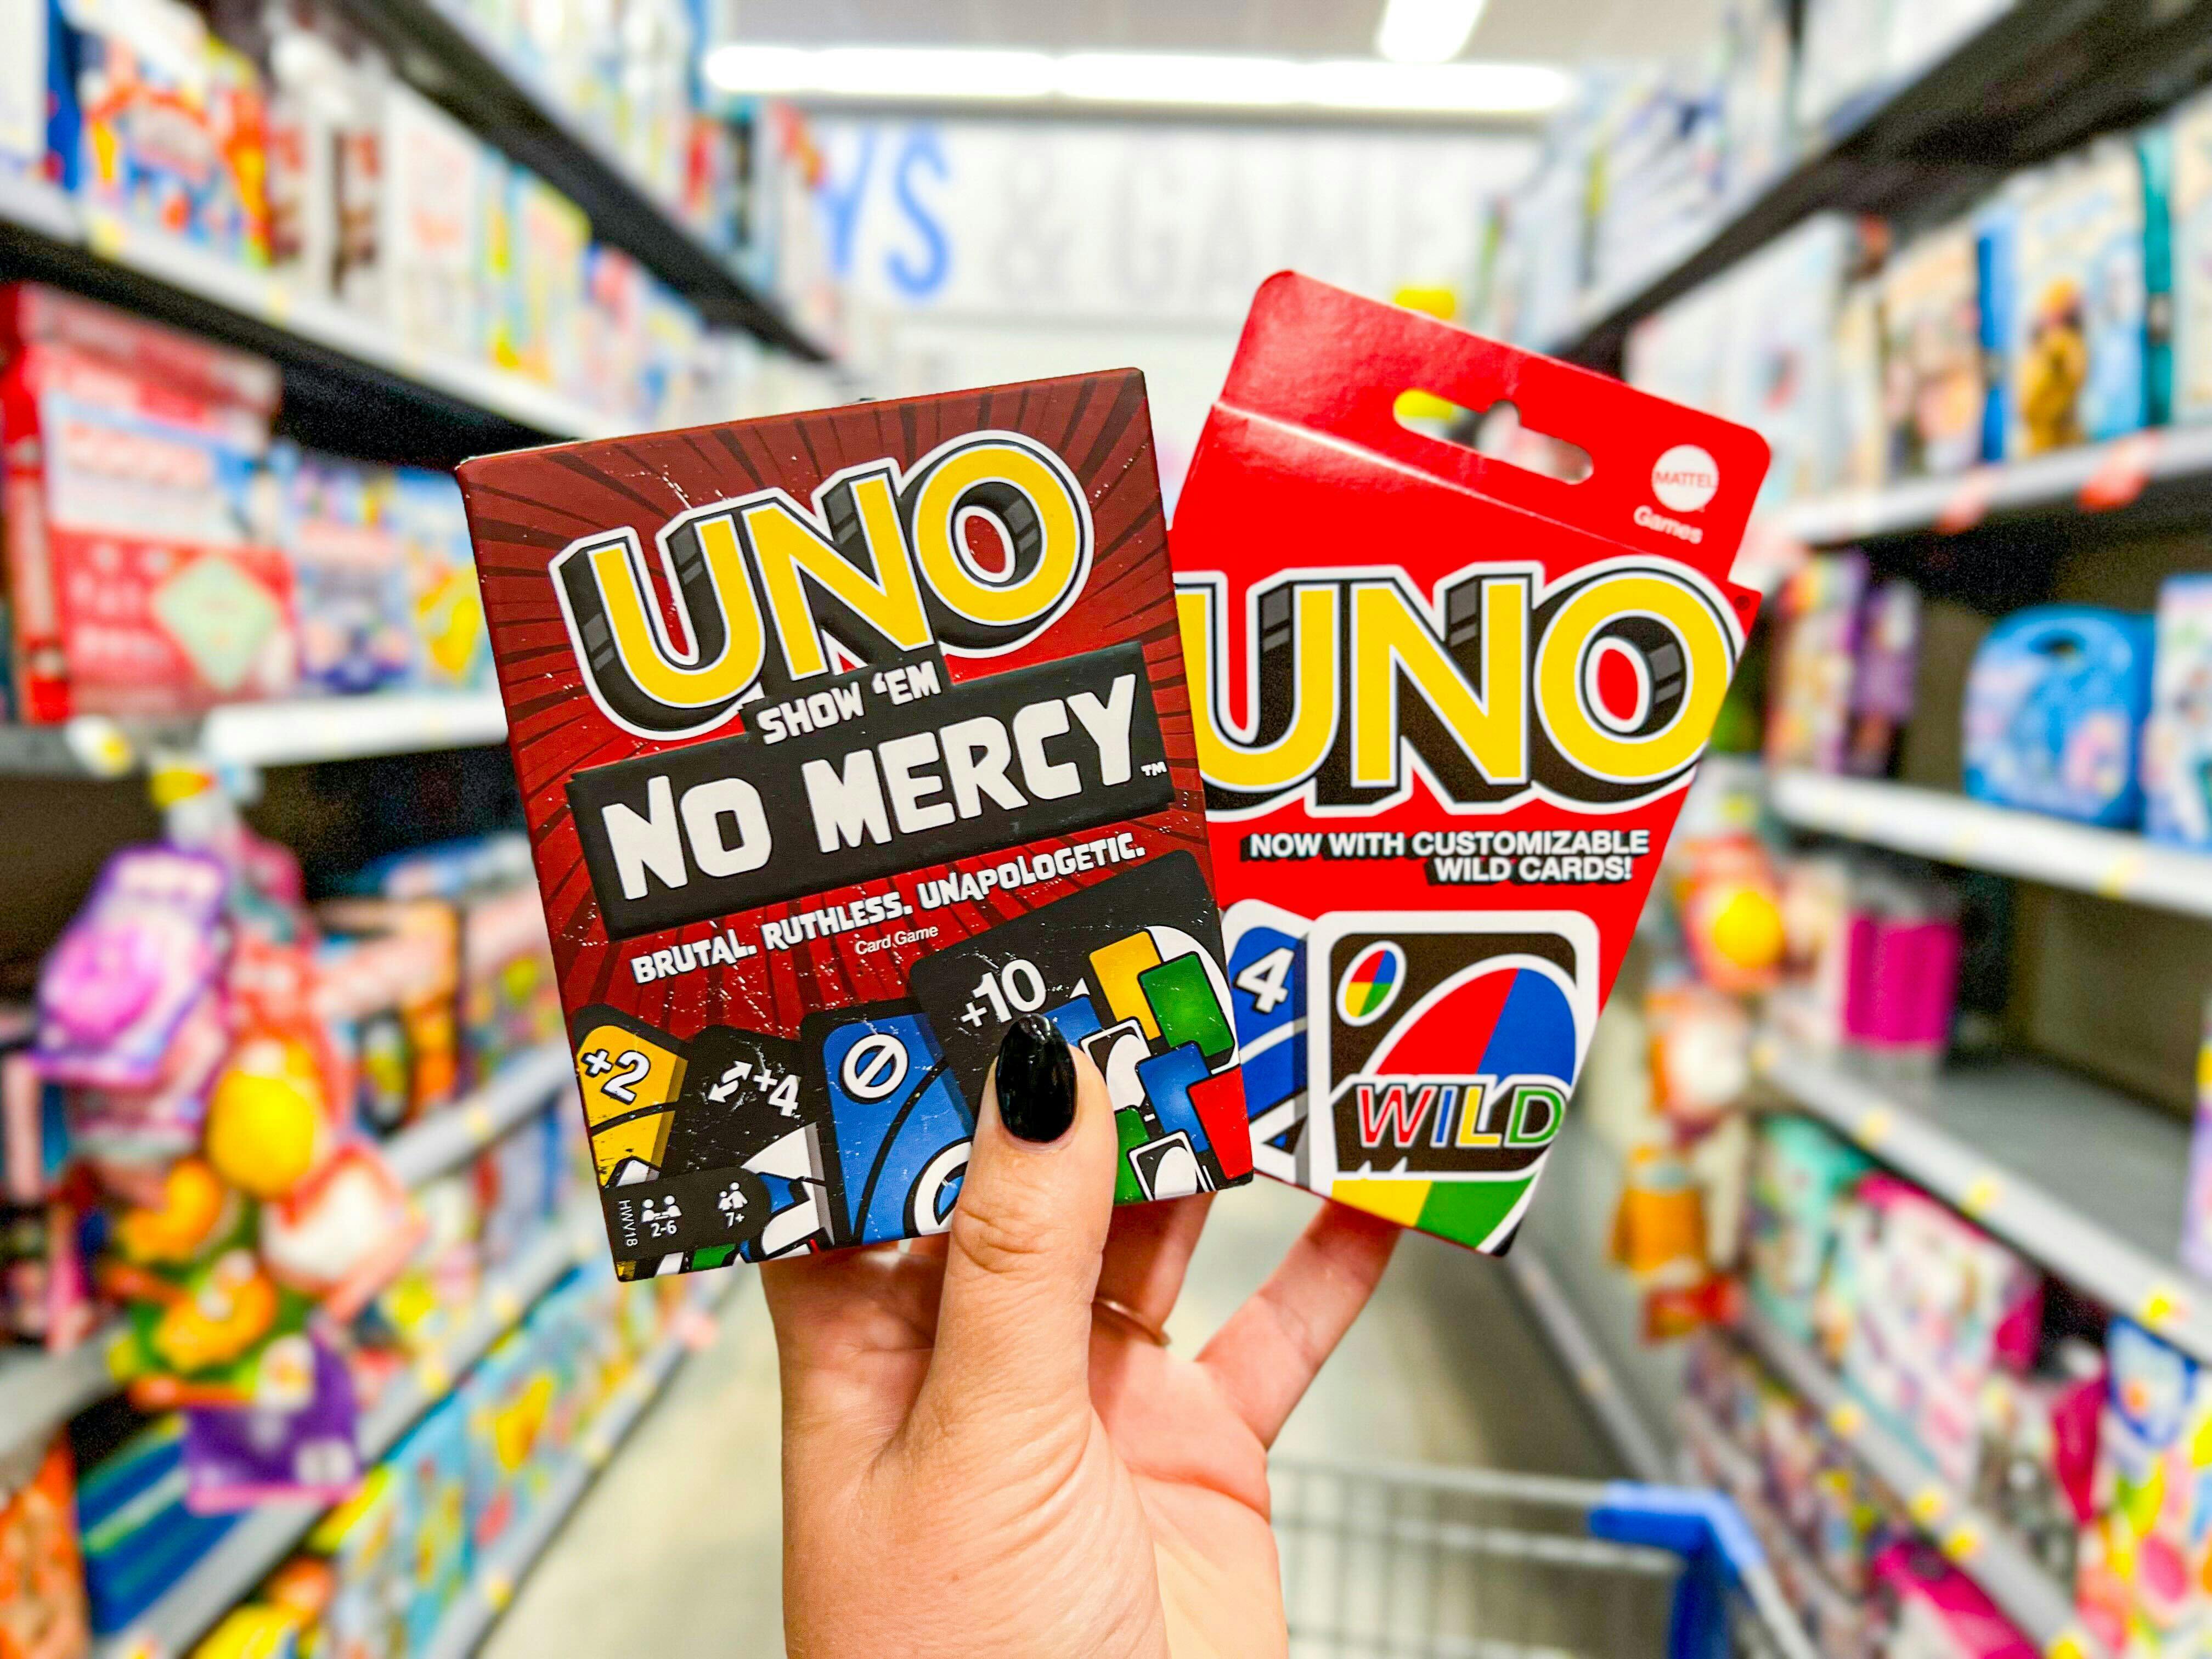 Mattel UNO Show em No Mercy Card Game- Lot Of 50